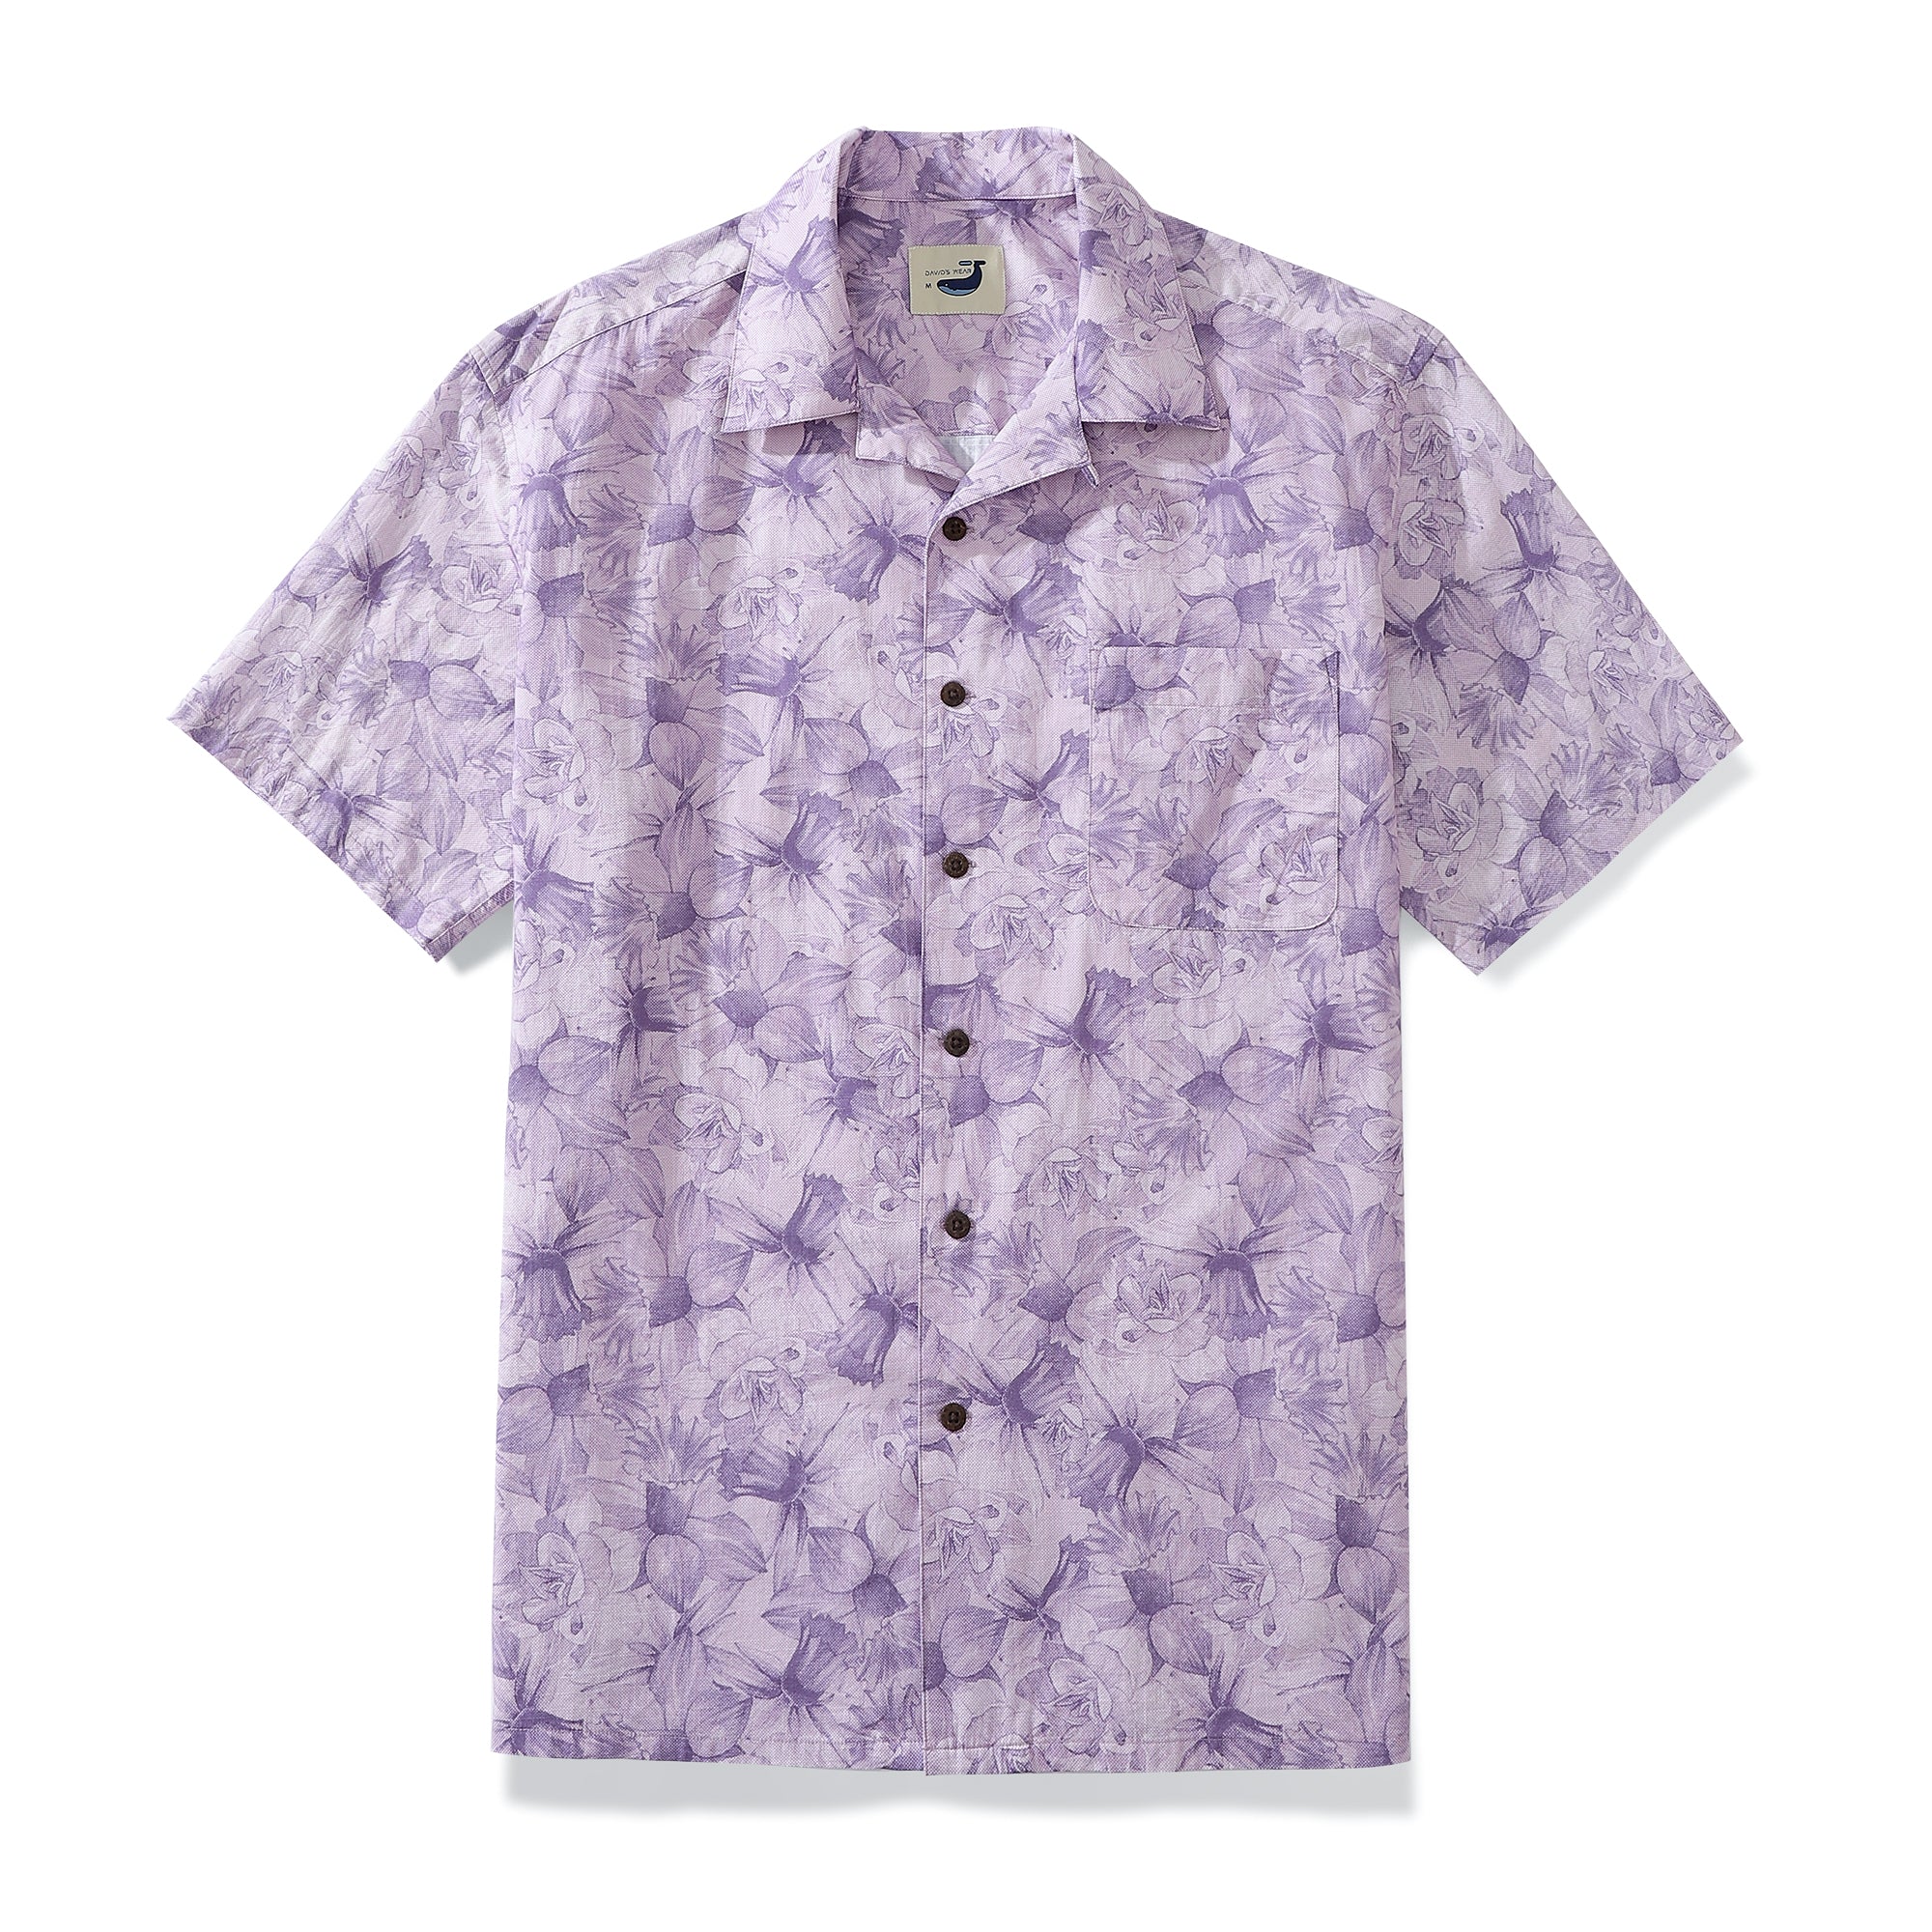 Daffodils Light Purple Golf Shirts Men's 100% Cotton Hawaiian Shirts ...